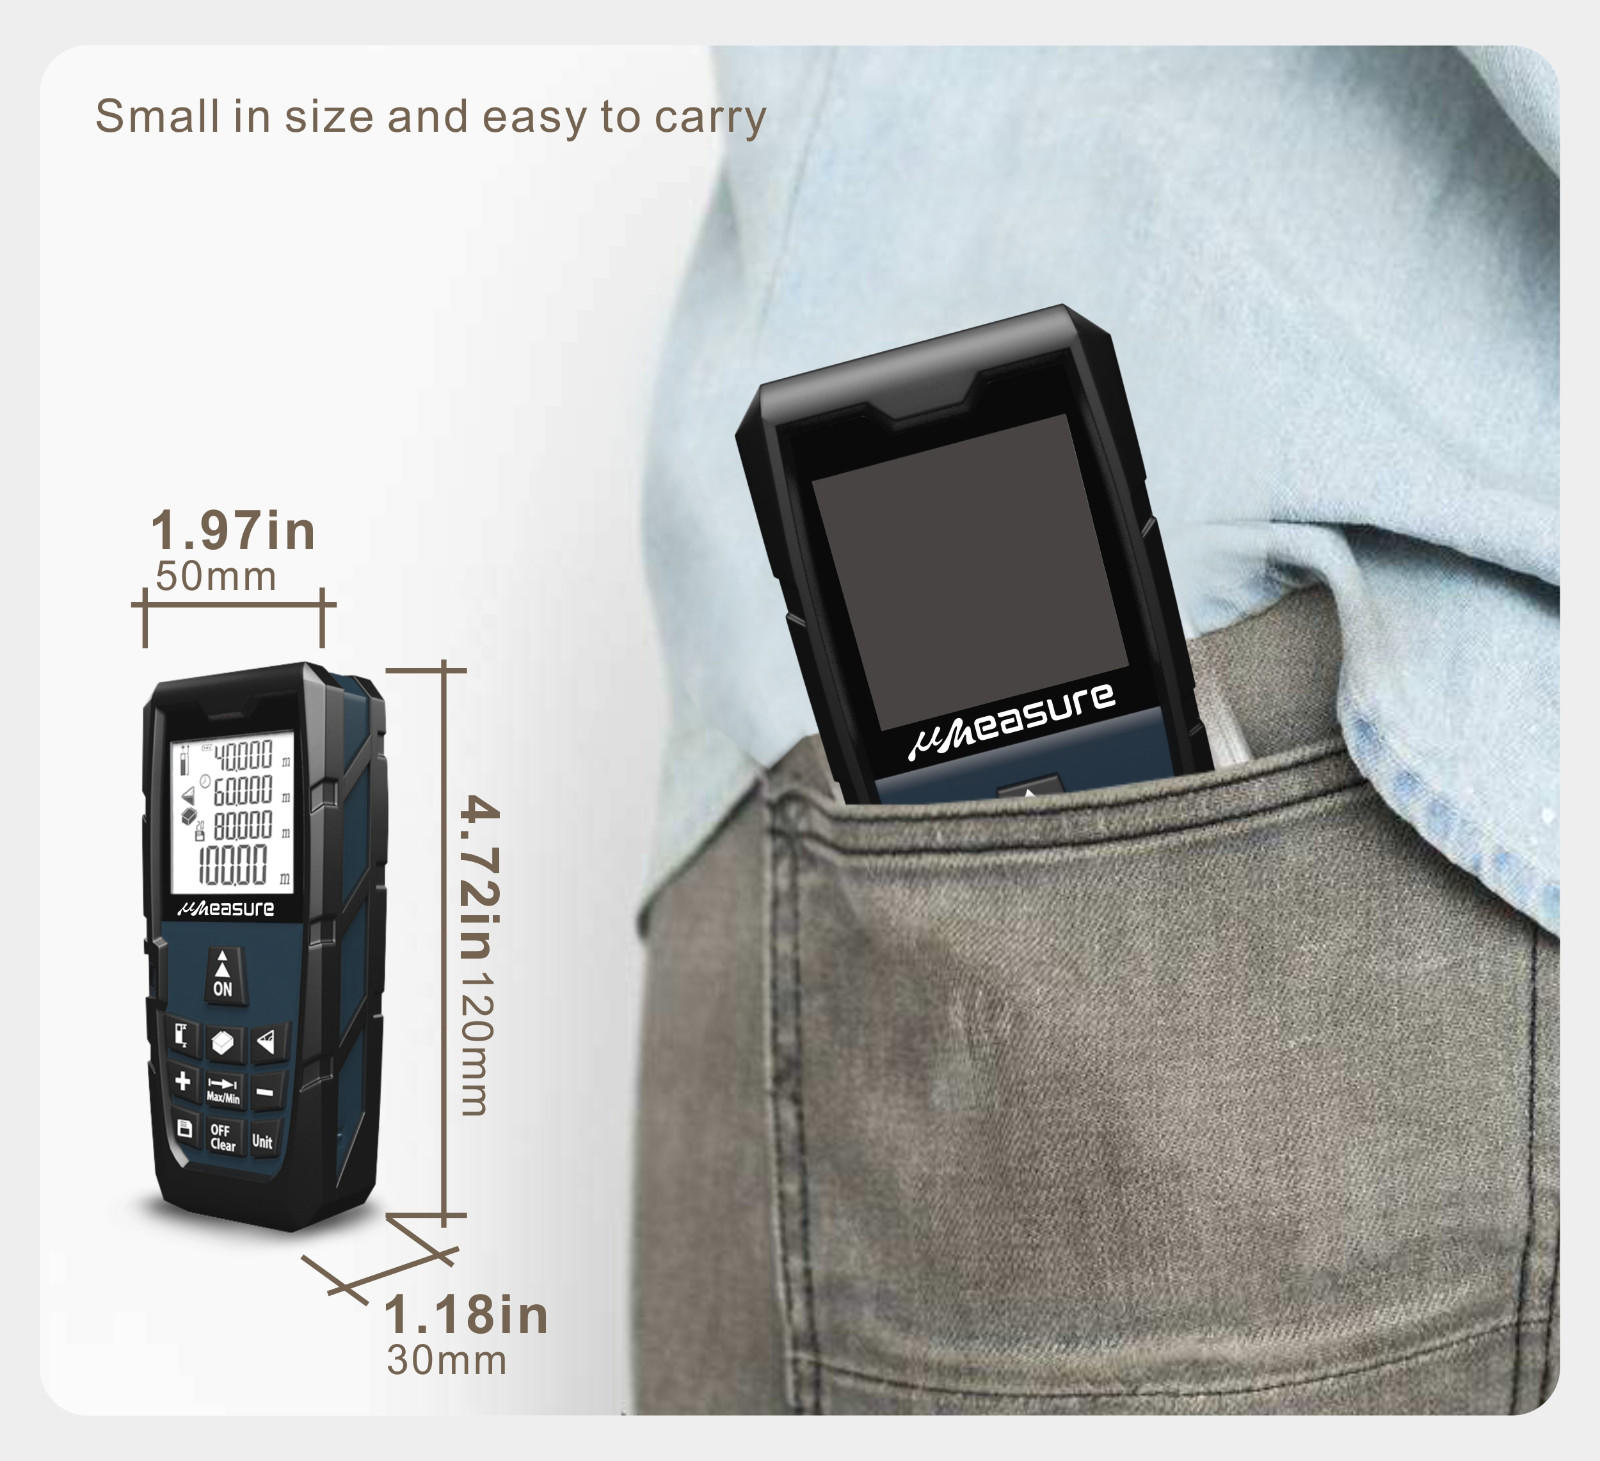 UMeasure digital laser measuring device mini bluetooth for measuring